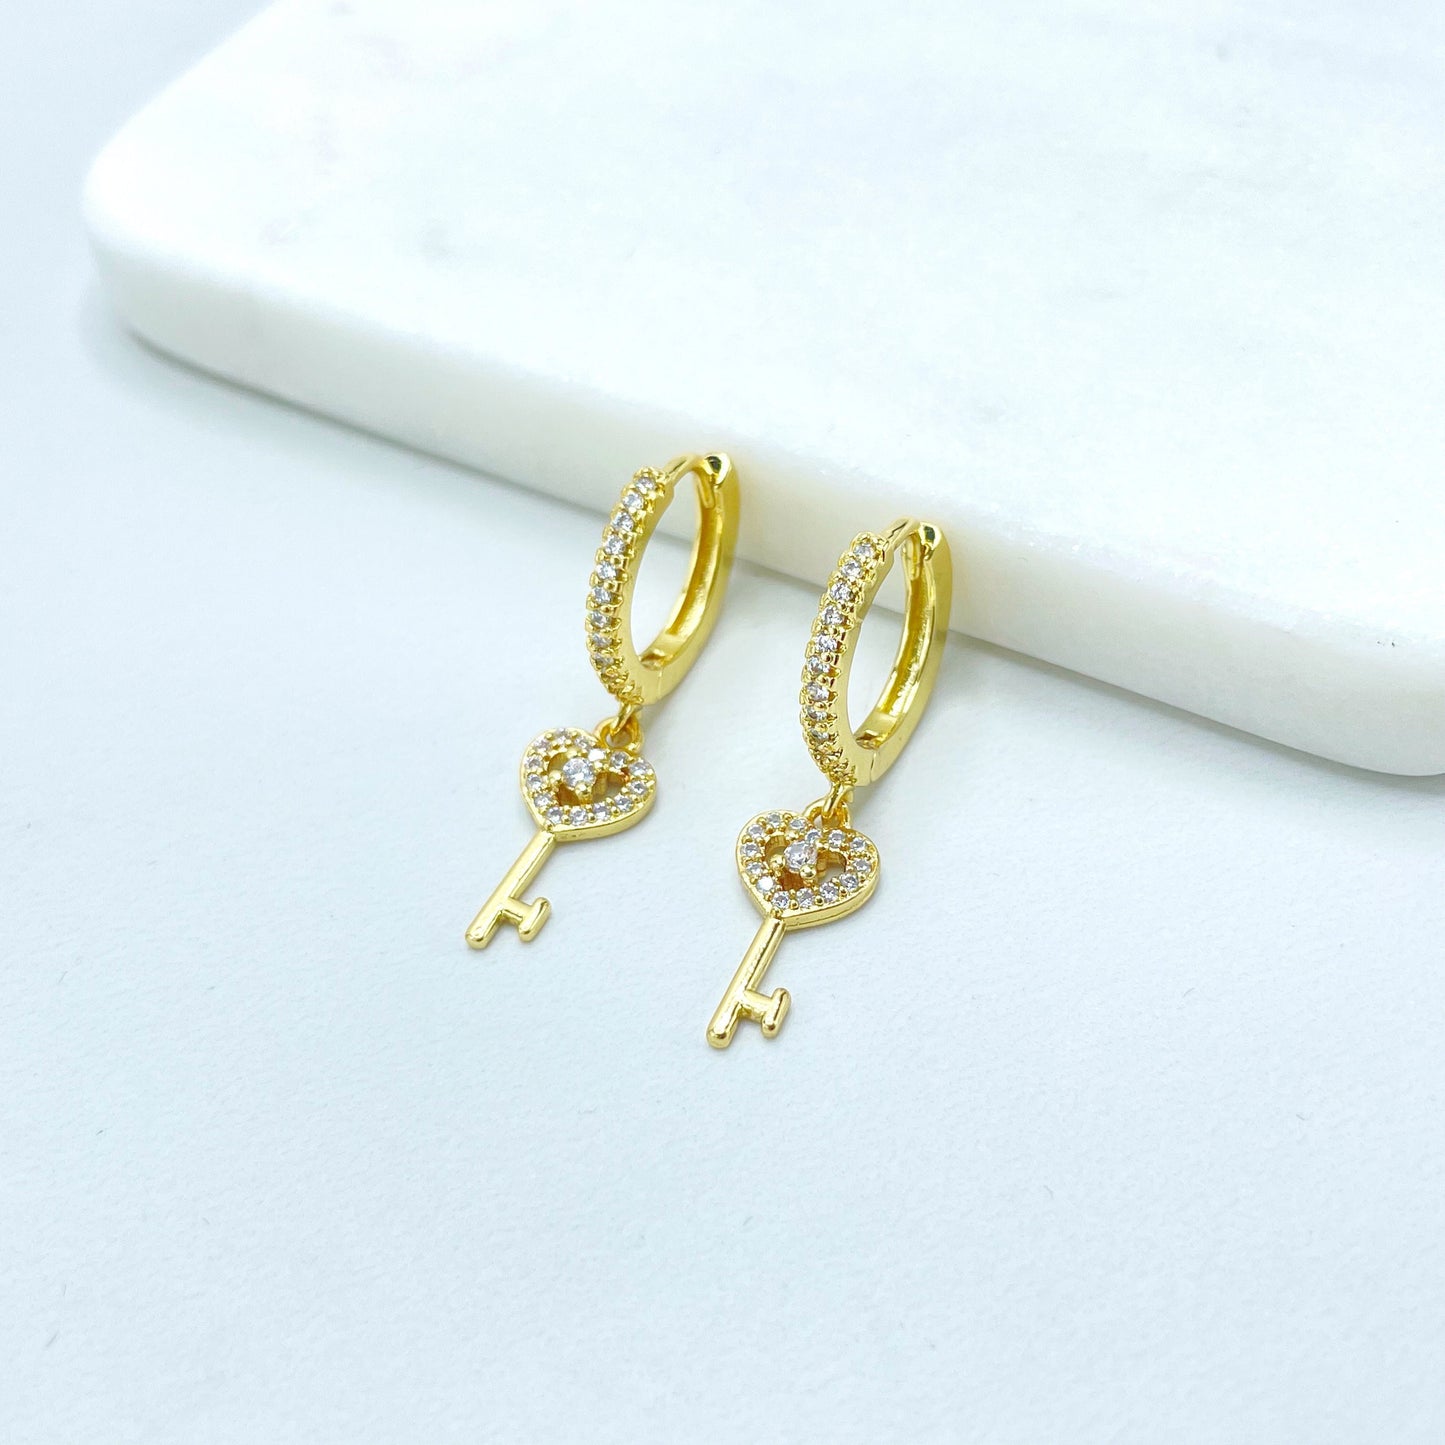 18k Gold Filled 15mm Huggie Earrings with Micro Cubic Zirconia Key in Heart Shape Charm, Dangle Earrings, Wholesale Jewelry Making Supplies